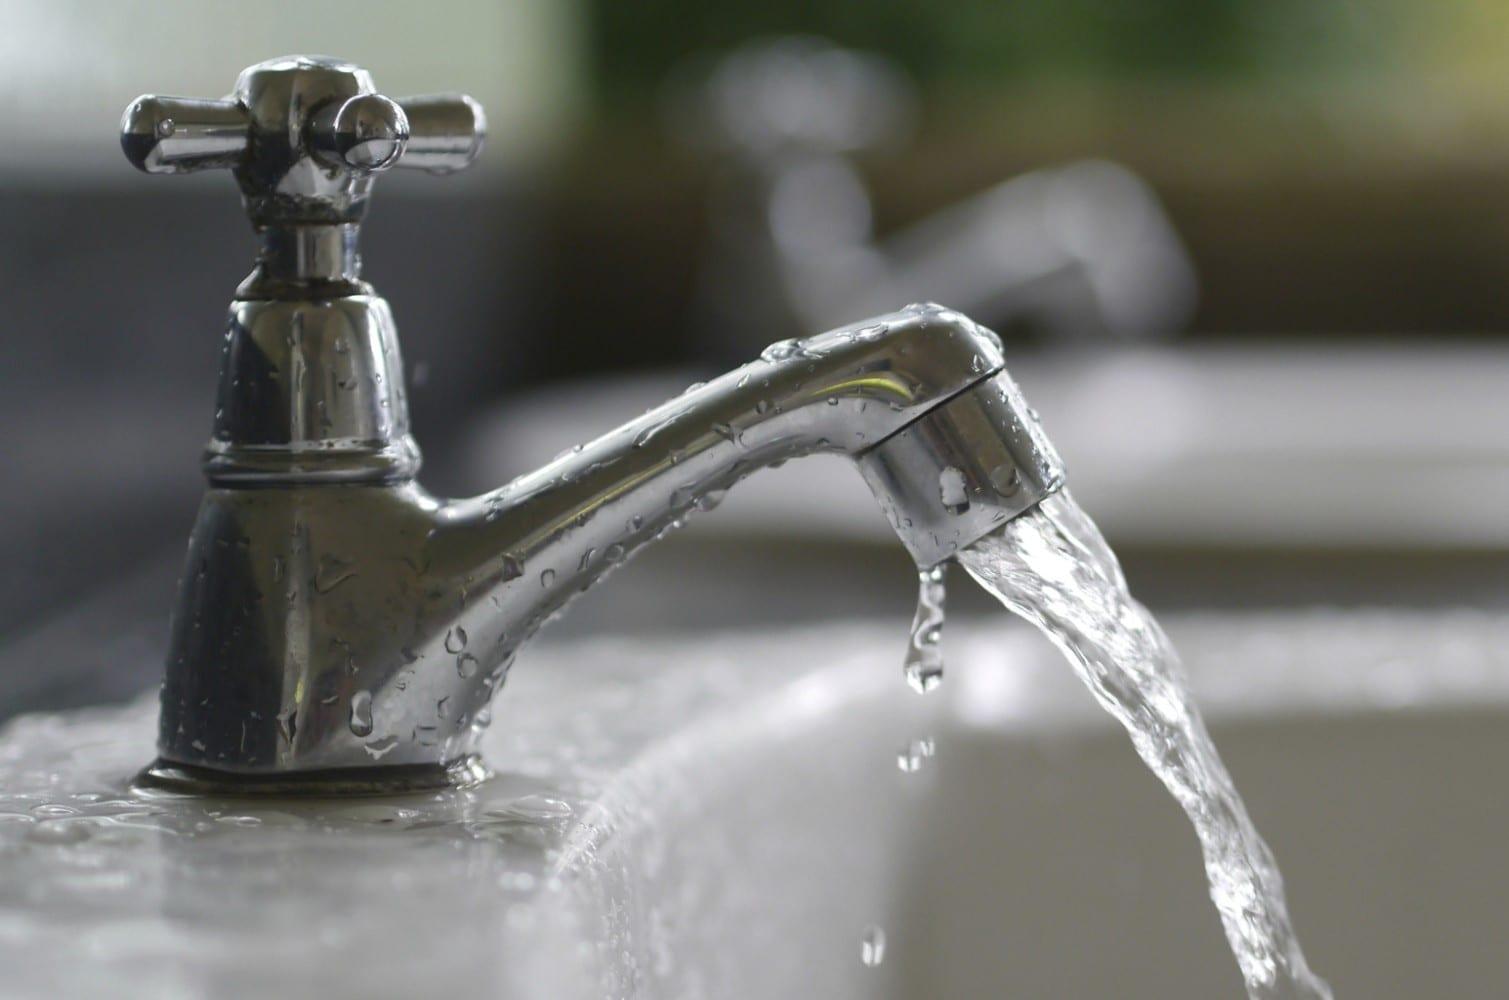 Prefeitura desautoriza Saneago sobre reajuste na conta de água